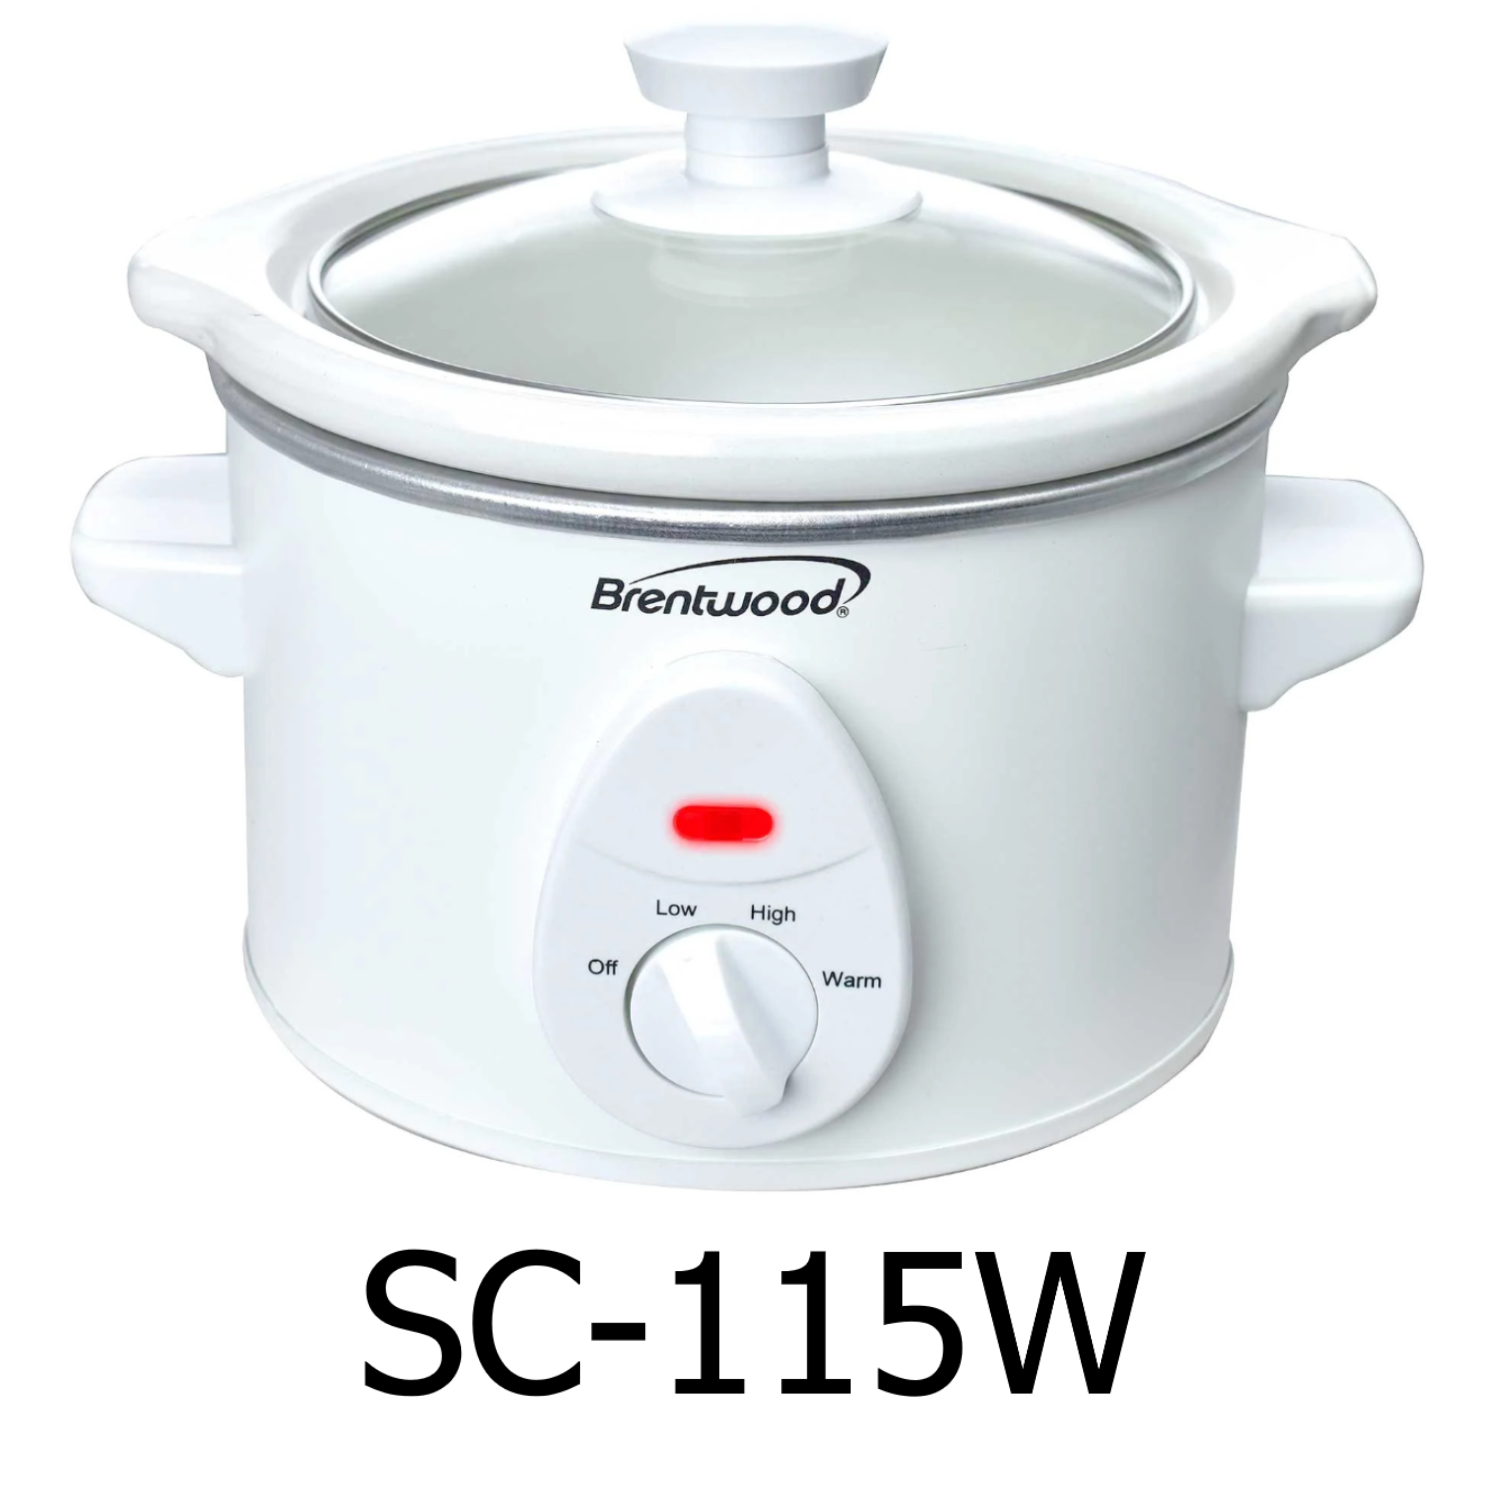 Brentwood Sc-115w 1.5 Quart Slow Cooker